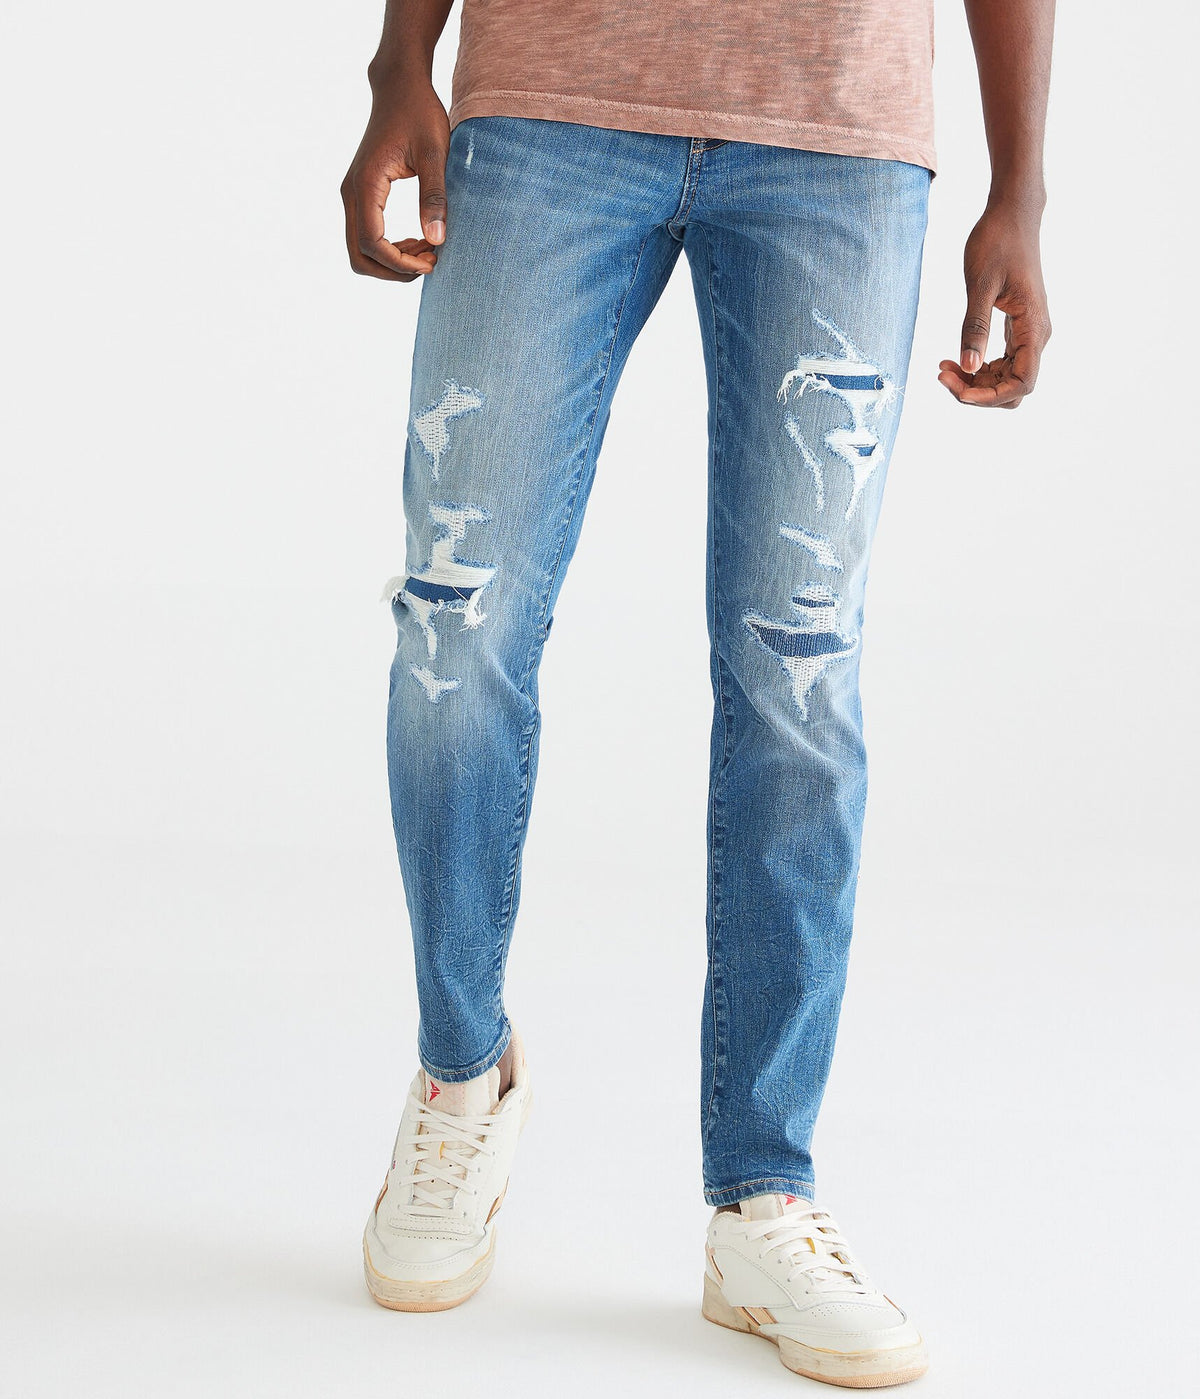 Aeropostale Mens' Skinny Premium Jean With LYCRA FREEF!T Technology - Blue - Size 30X34 - Cotton - Teen Fashion & Clothing Dark Wash